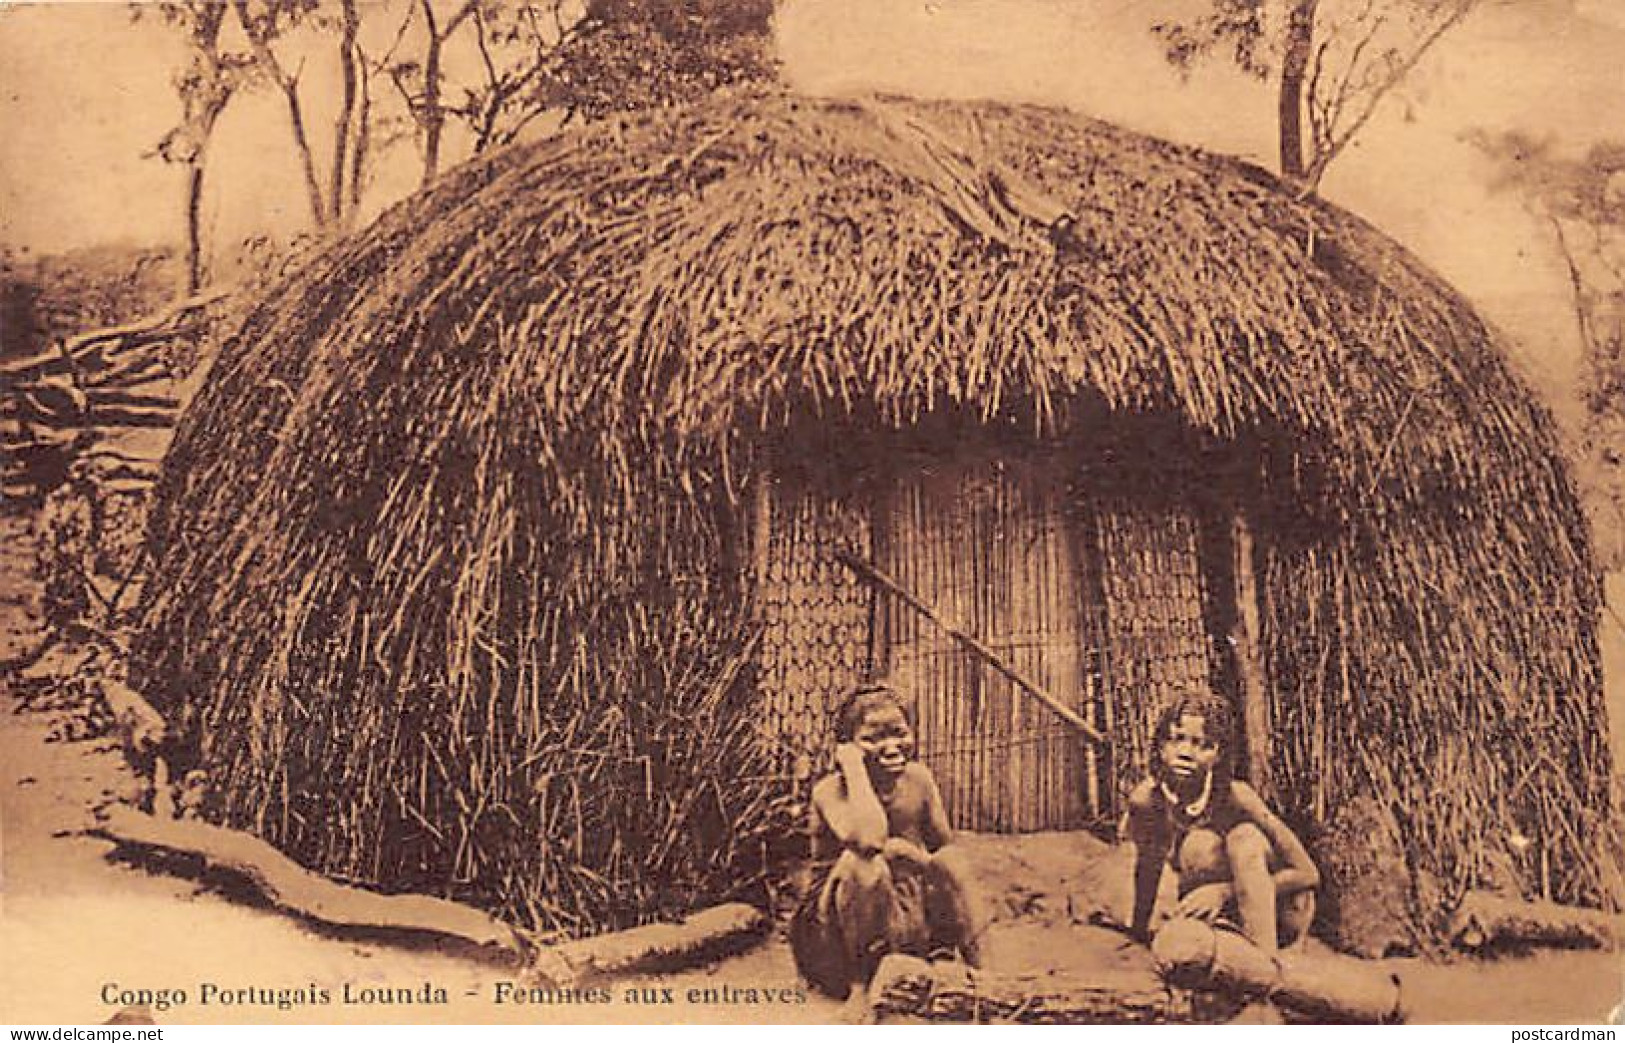 ANGOLA - Lunda Women In Shackles - Publ. Spiritus  - Angola